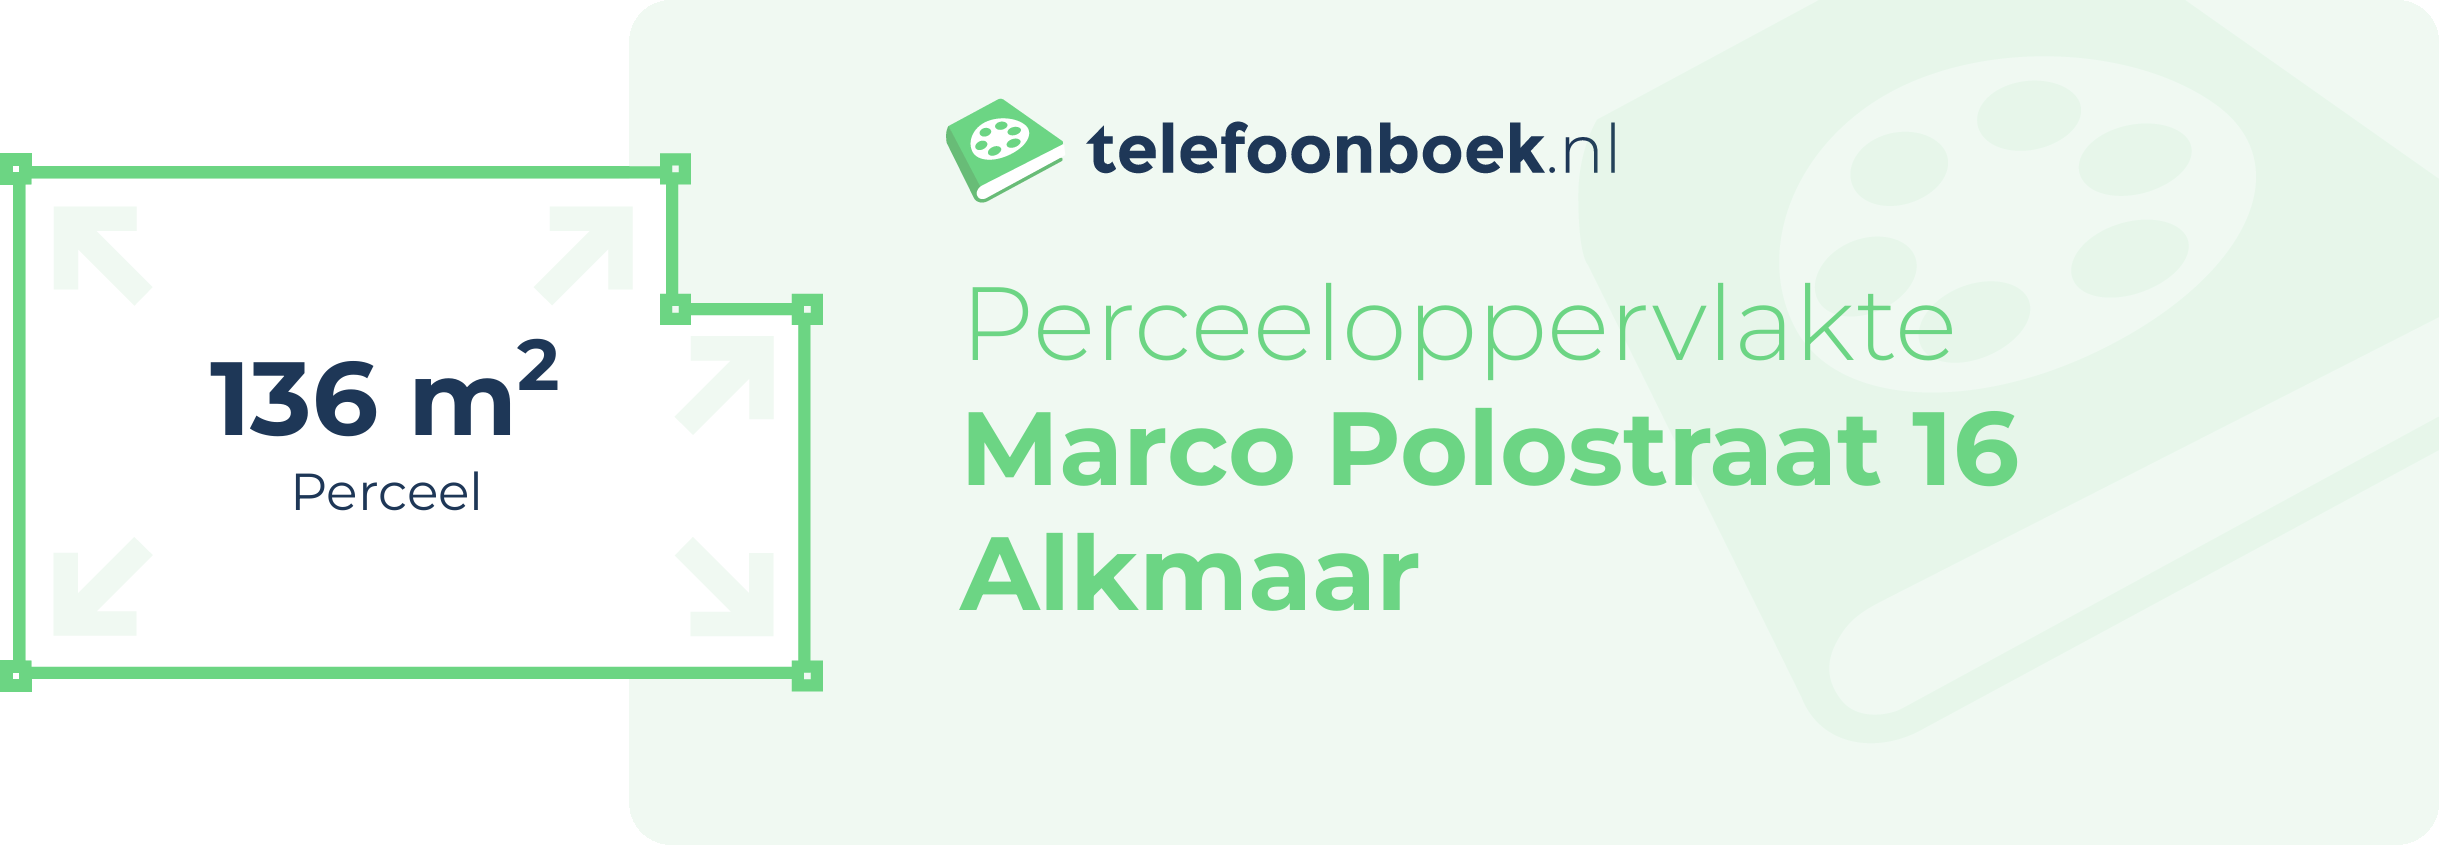 Perceeloppervlakte Marco Polostraat 16 Alkmaar